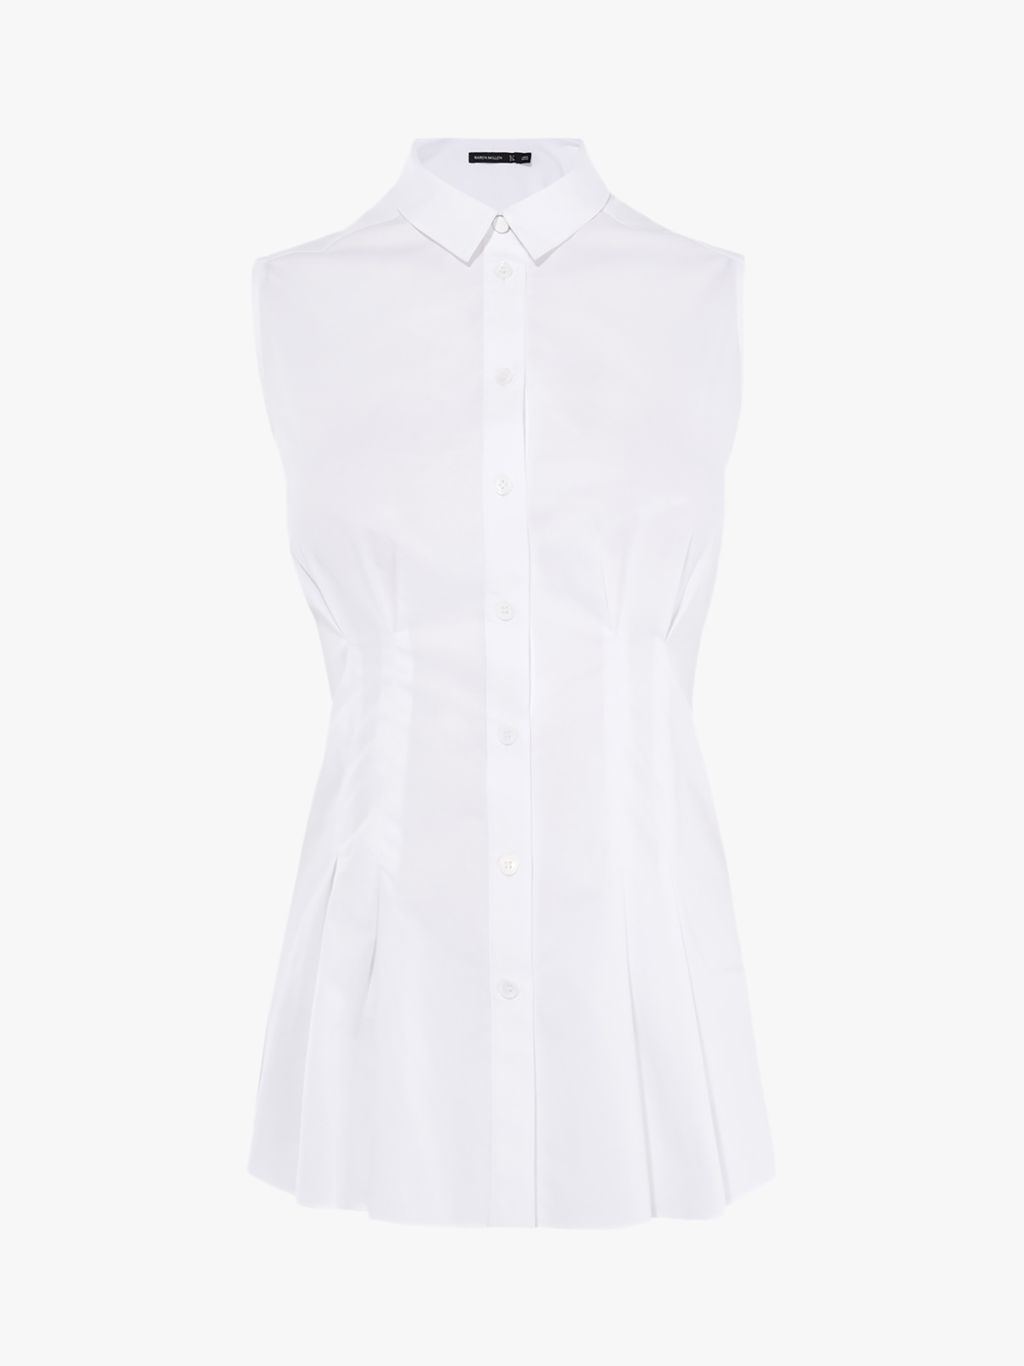 Karen Millen Cinched Waist Shirt, White